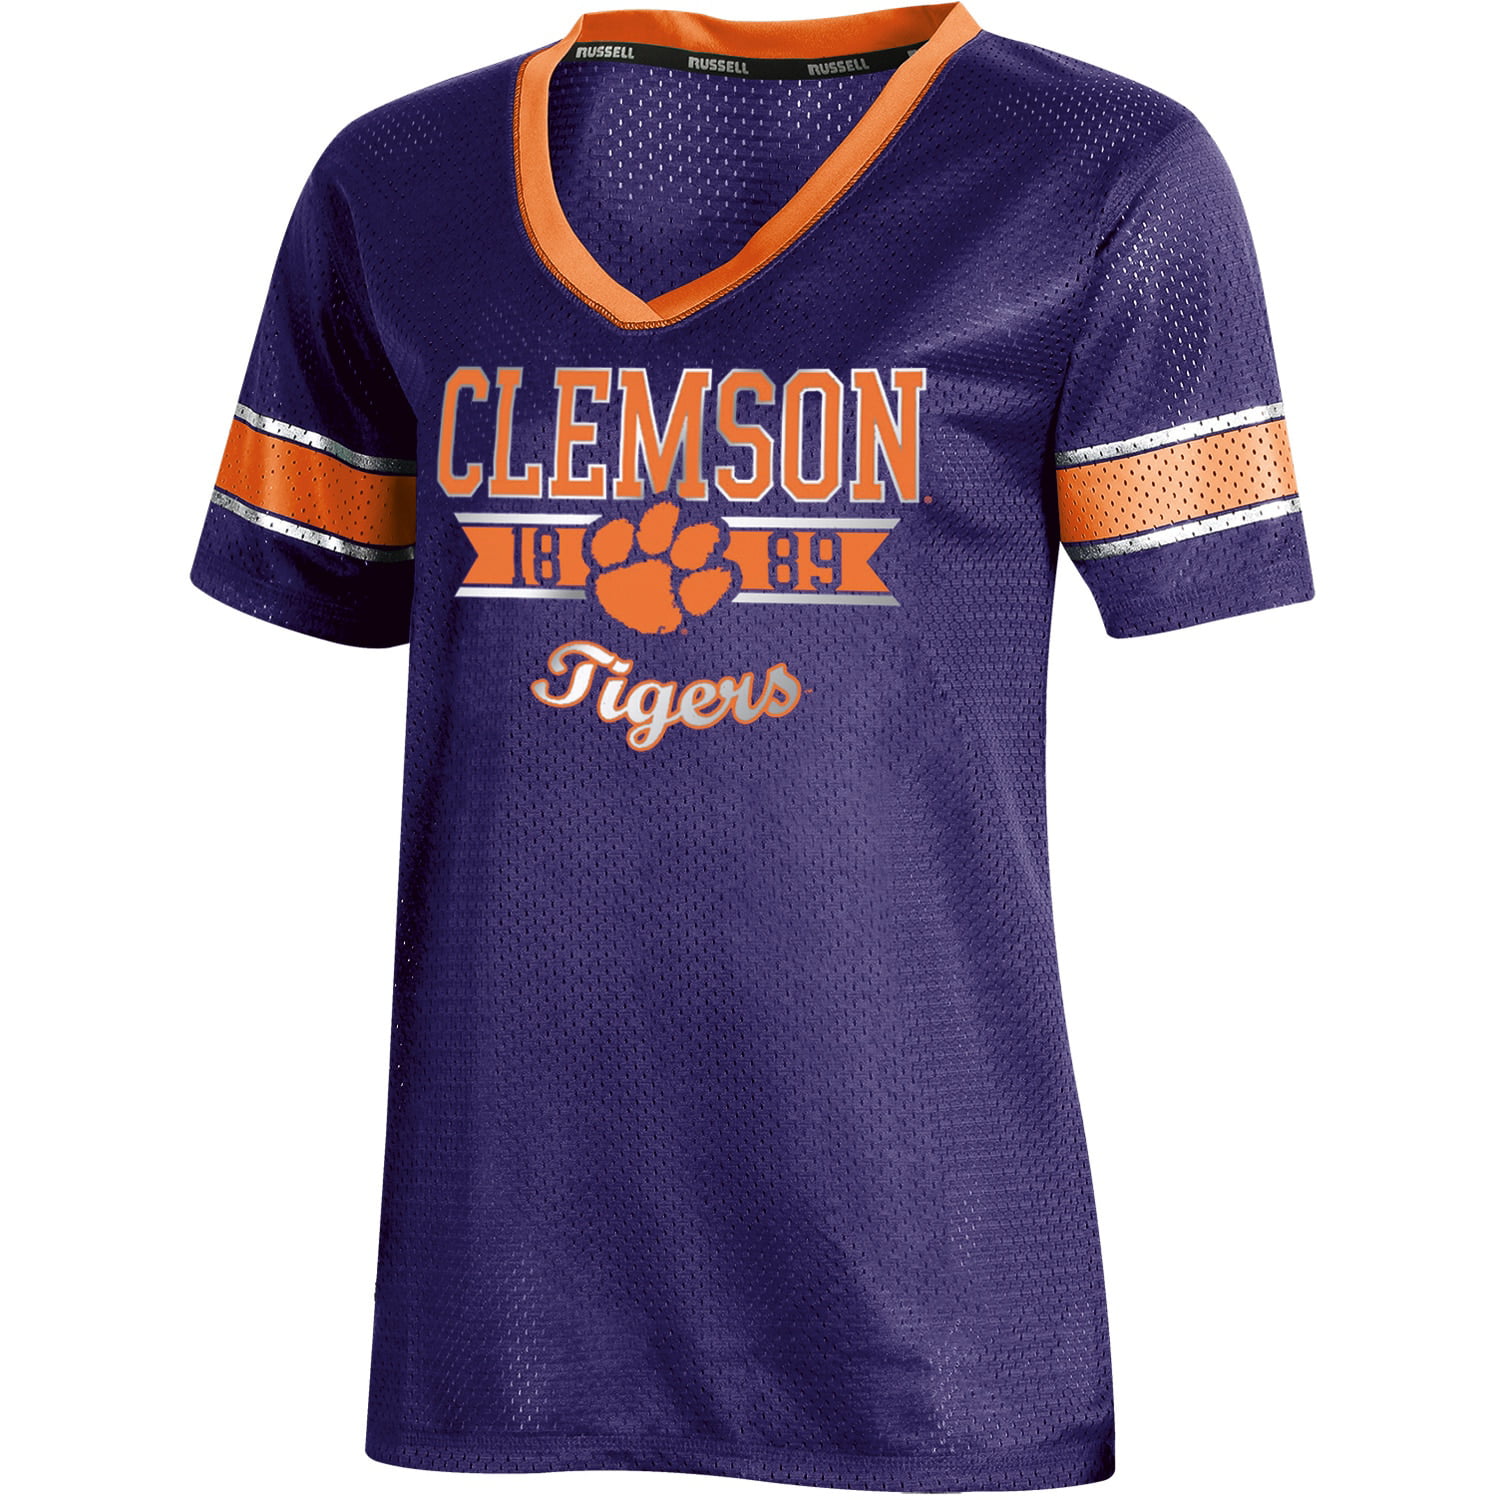 clemson tigers purple jersey